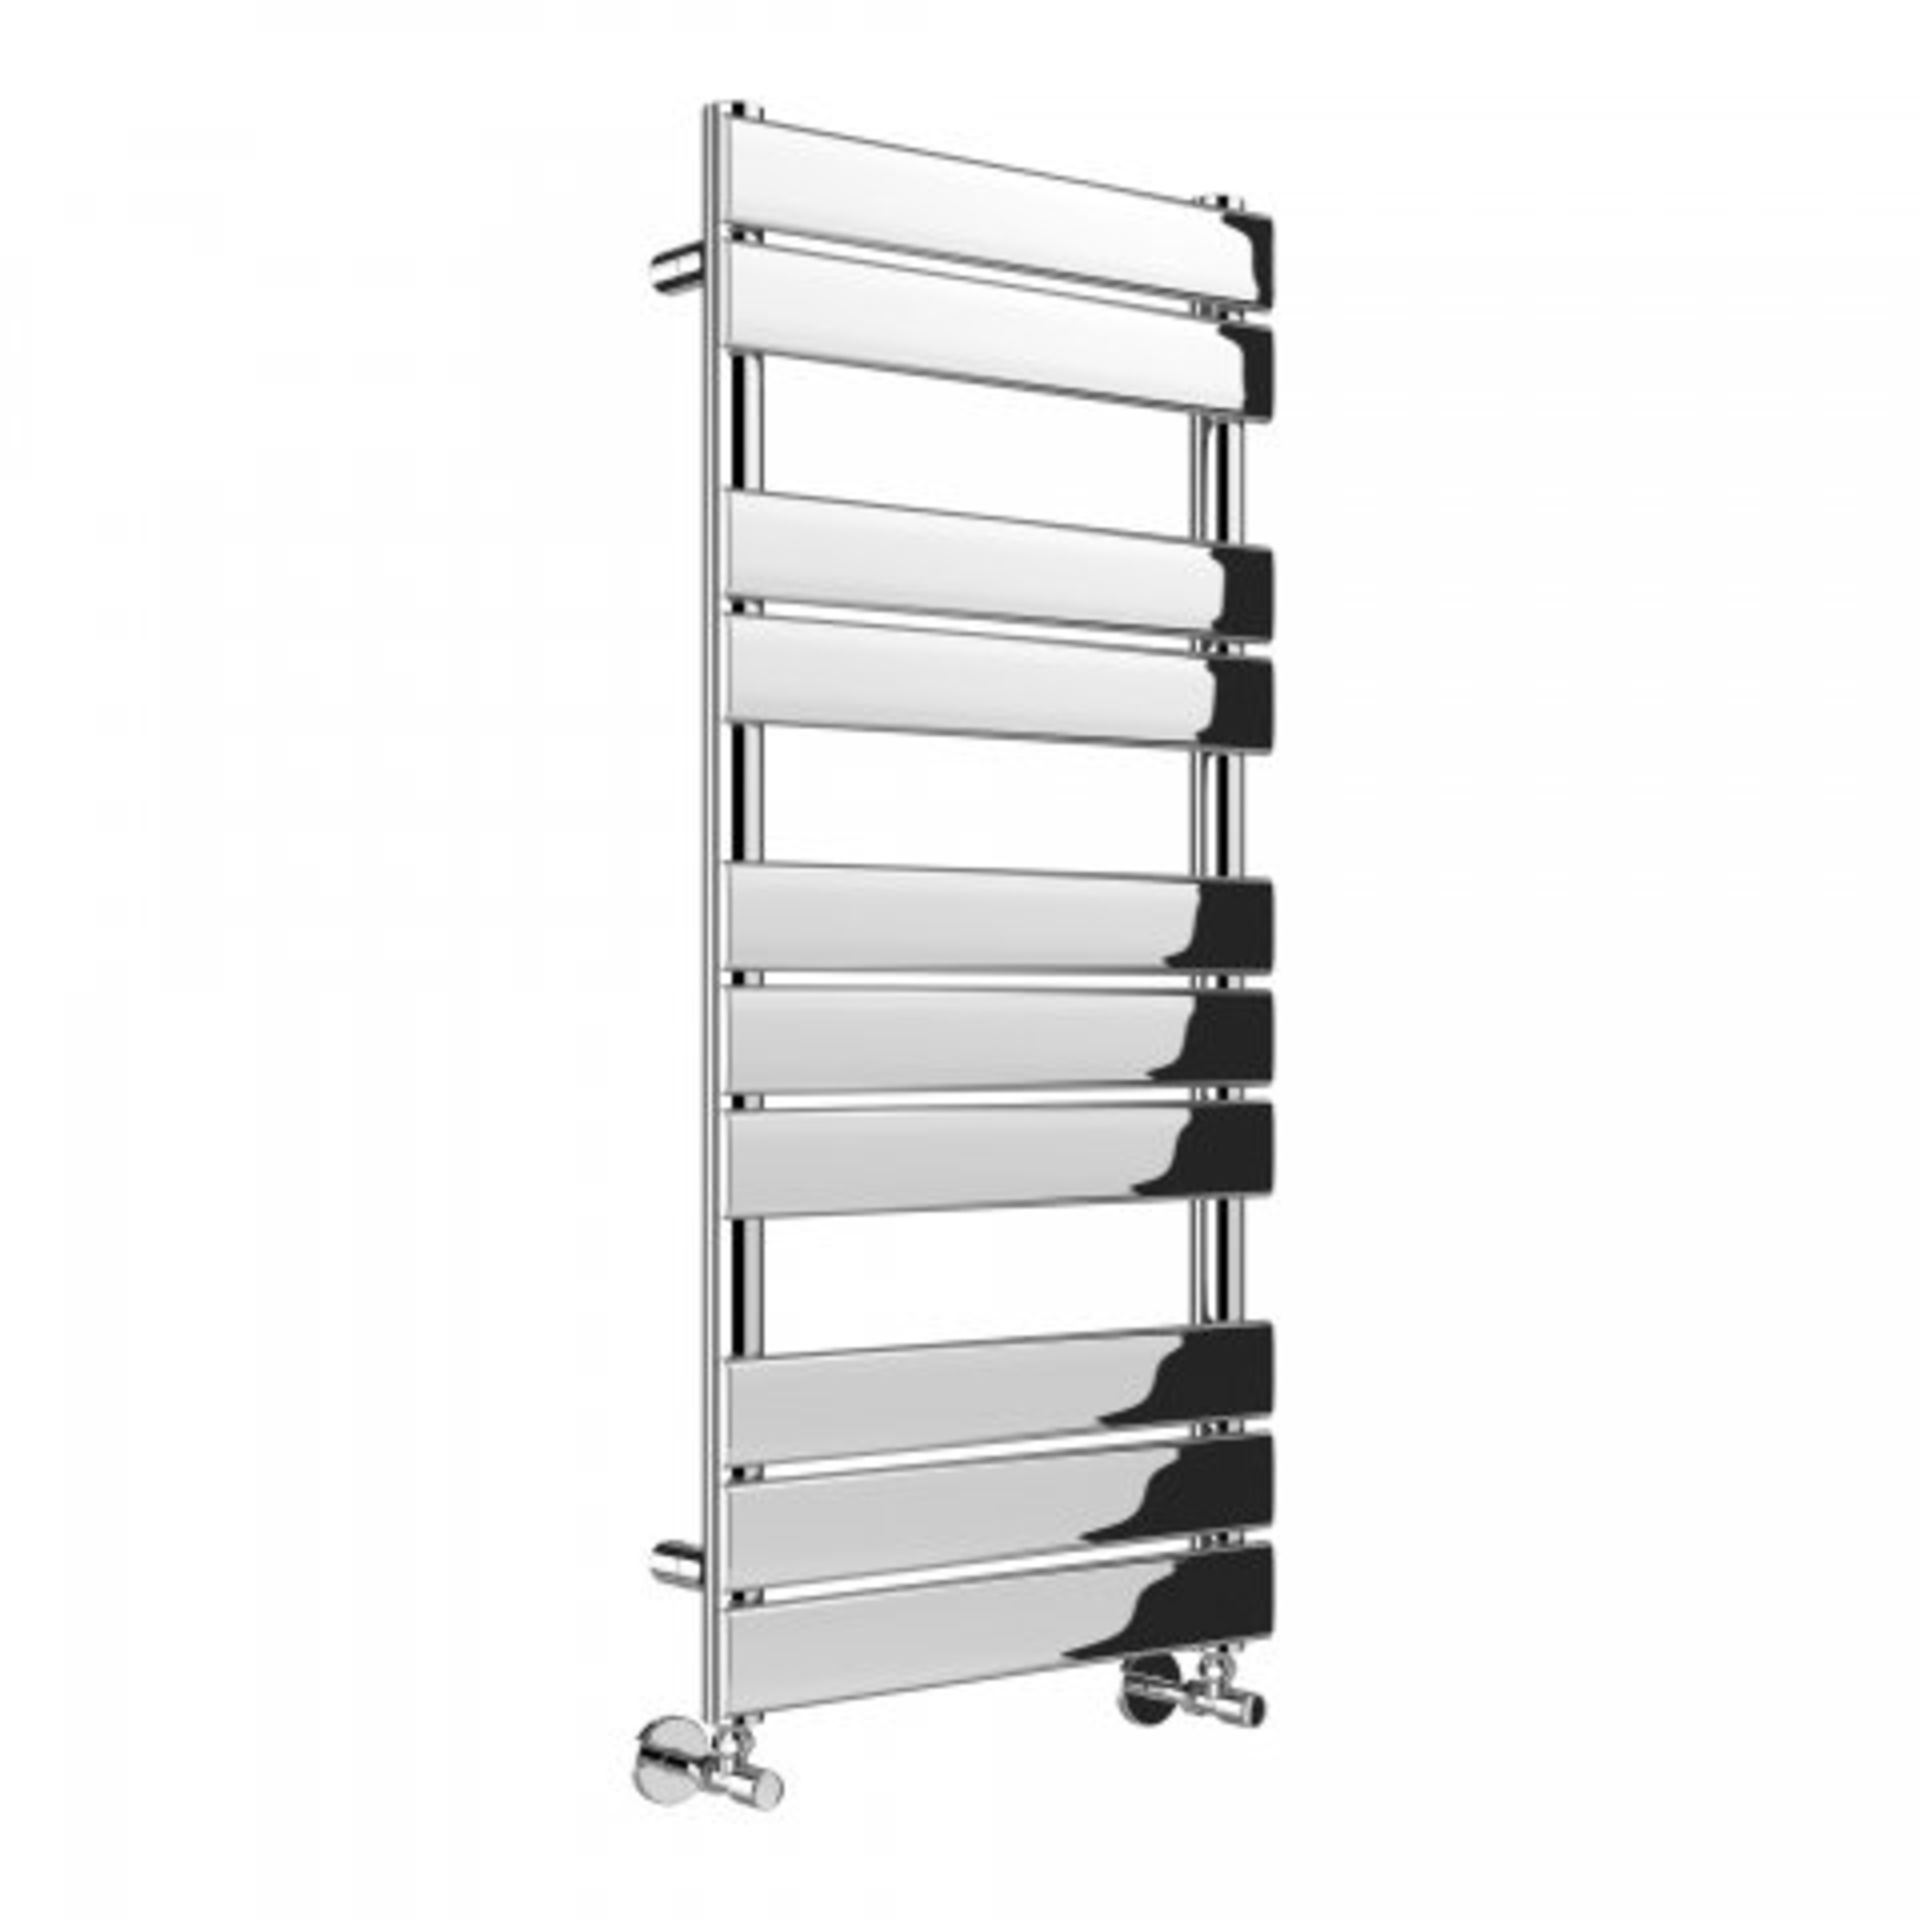 (SKU343) 1000x450mm Chrome Flat Panel Ladder Towel Radiator - Francis Range. RRP £284.39. - Image 3 of 3